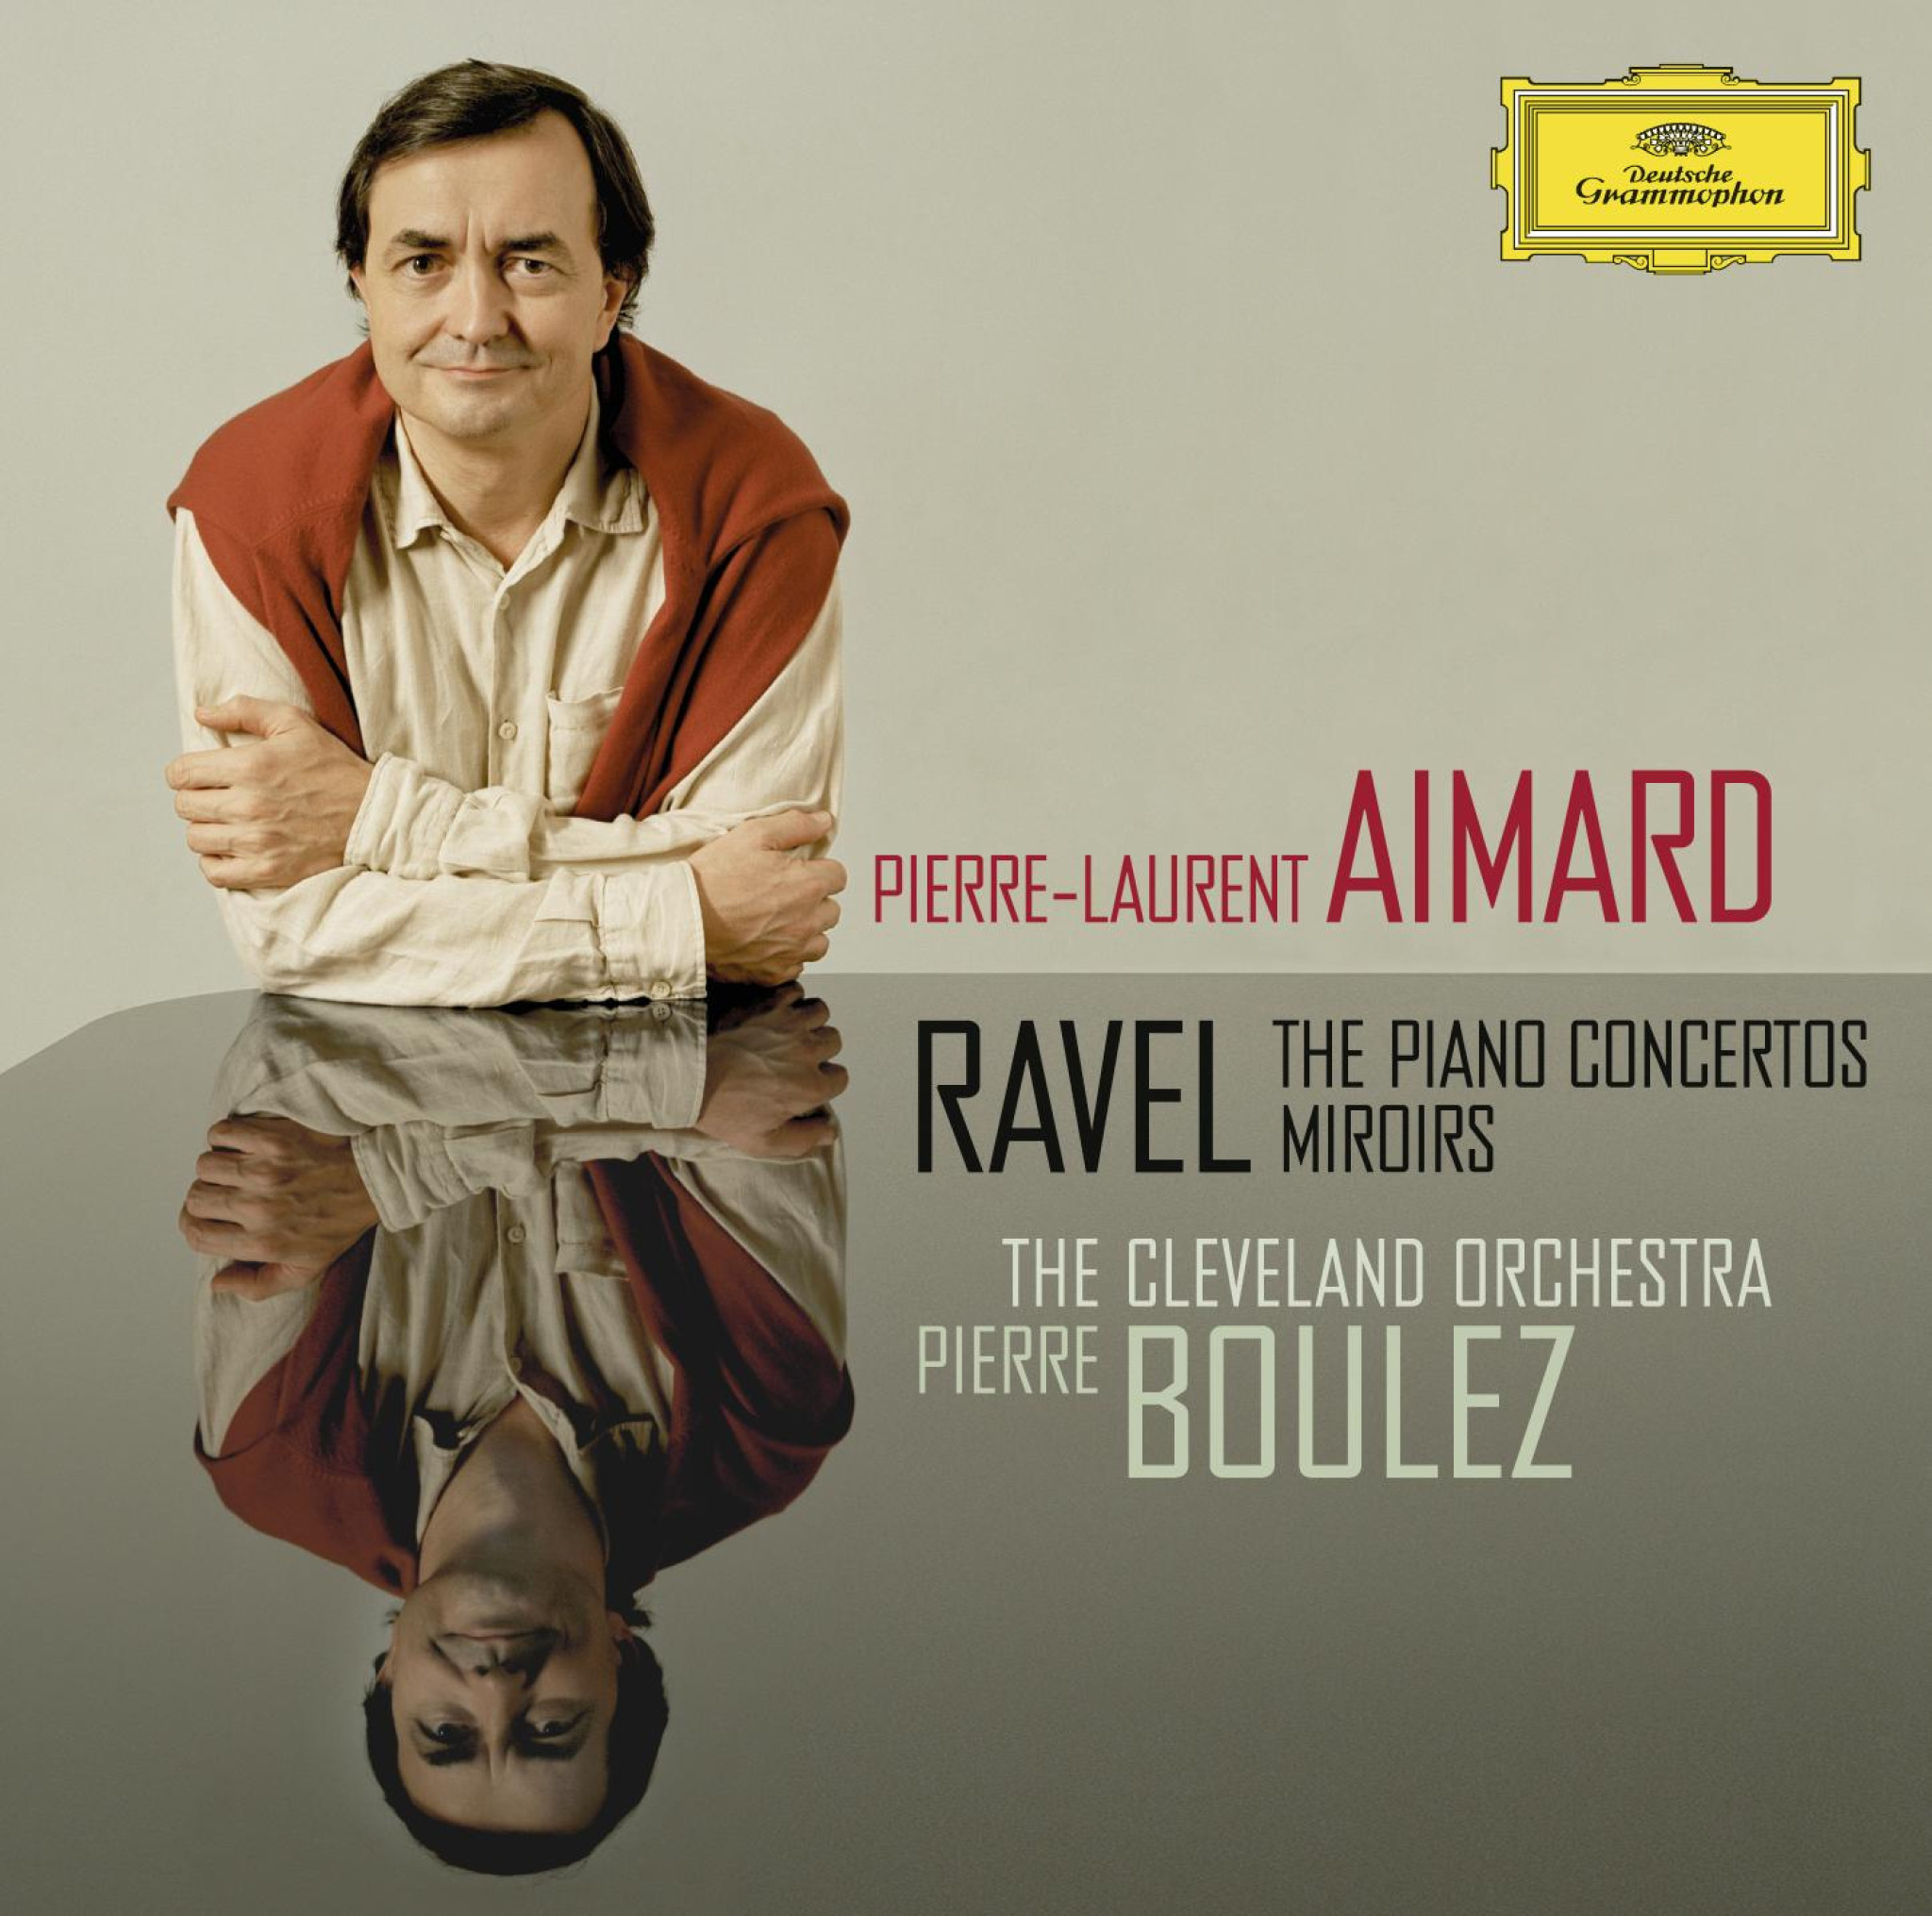 Pierre-Laurent Aimard - Ravel - 2010